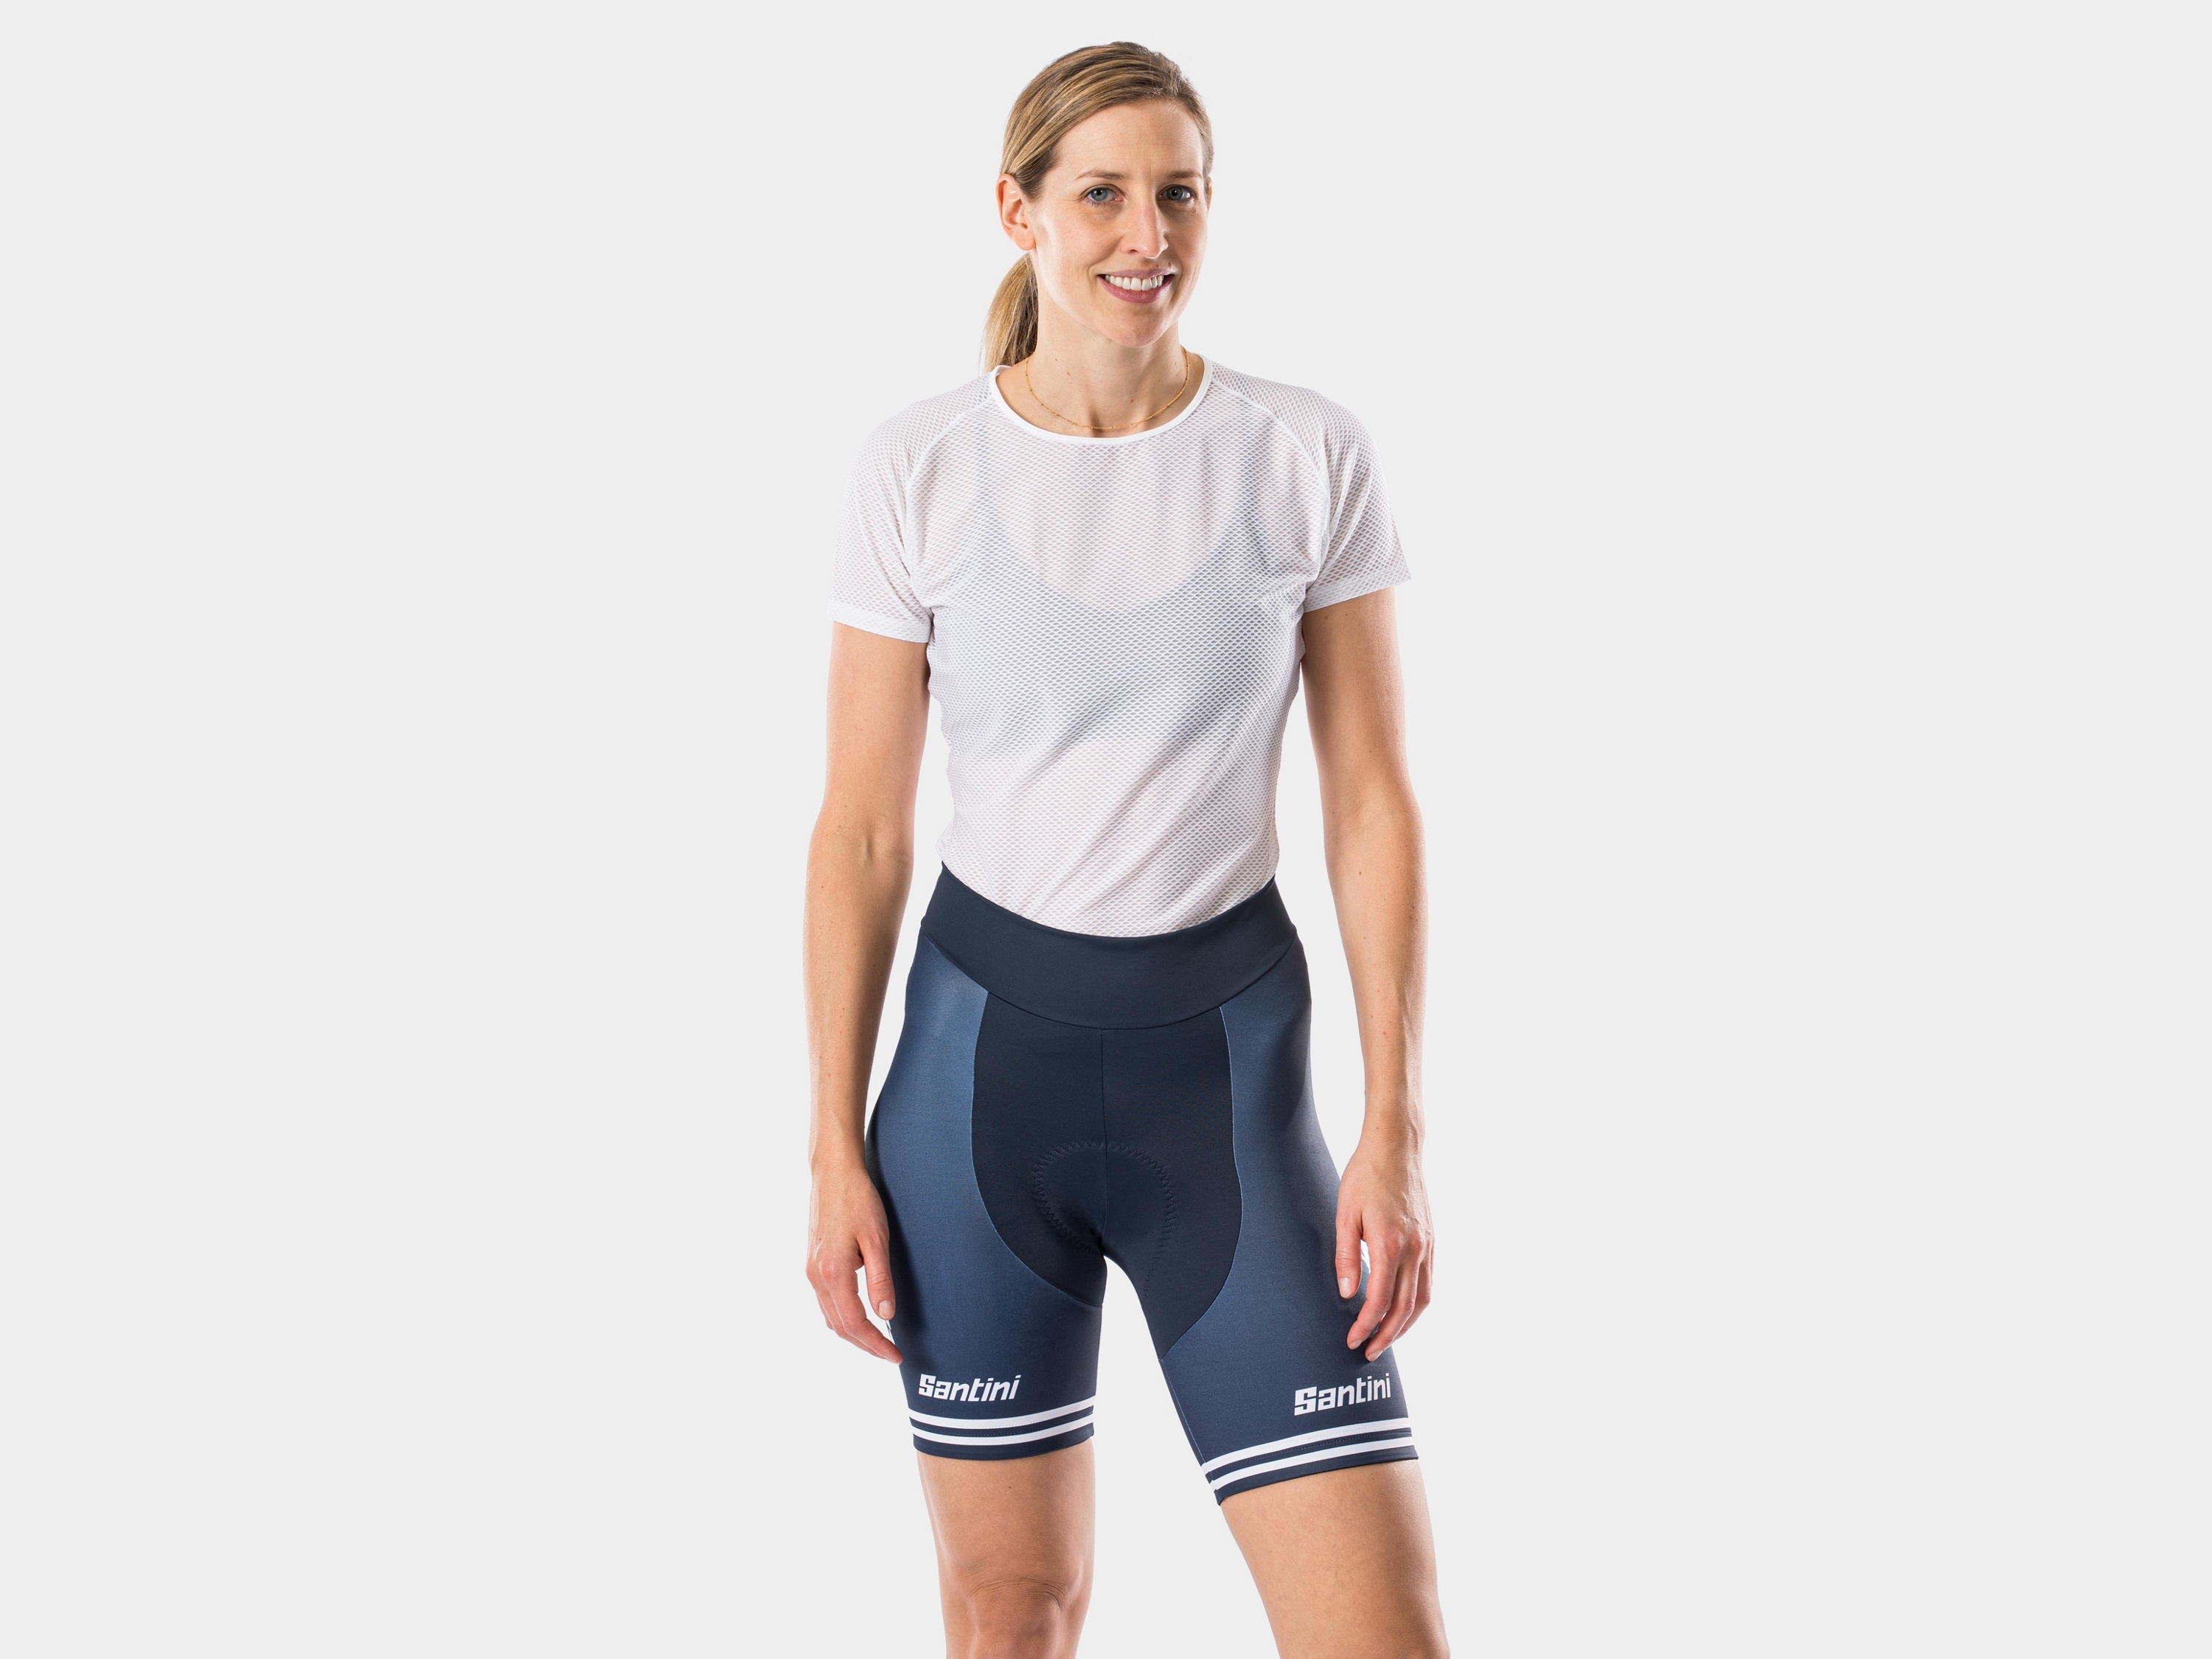 santini cycling clothing uk